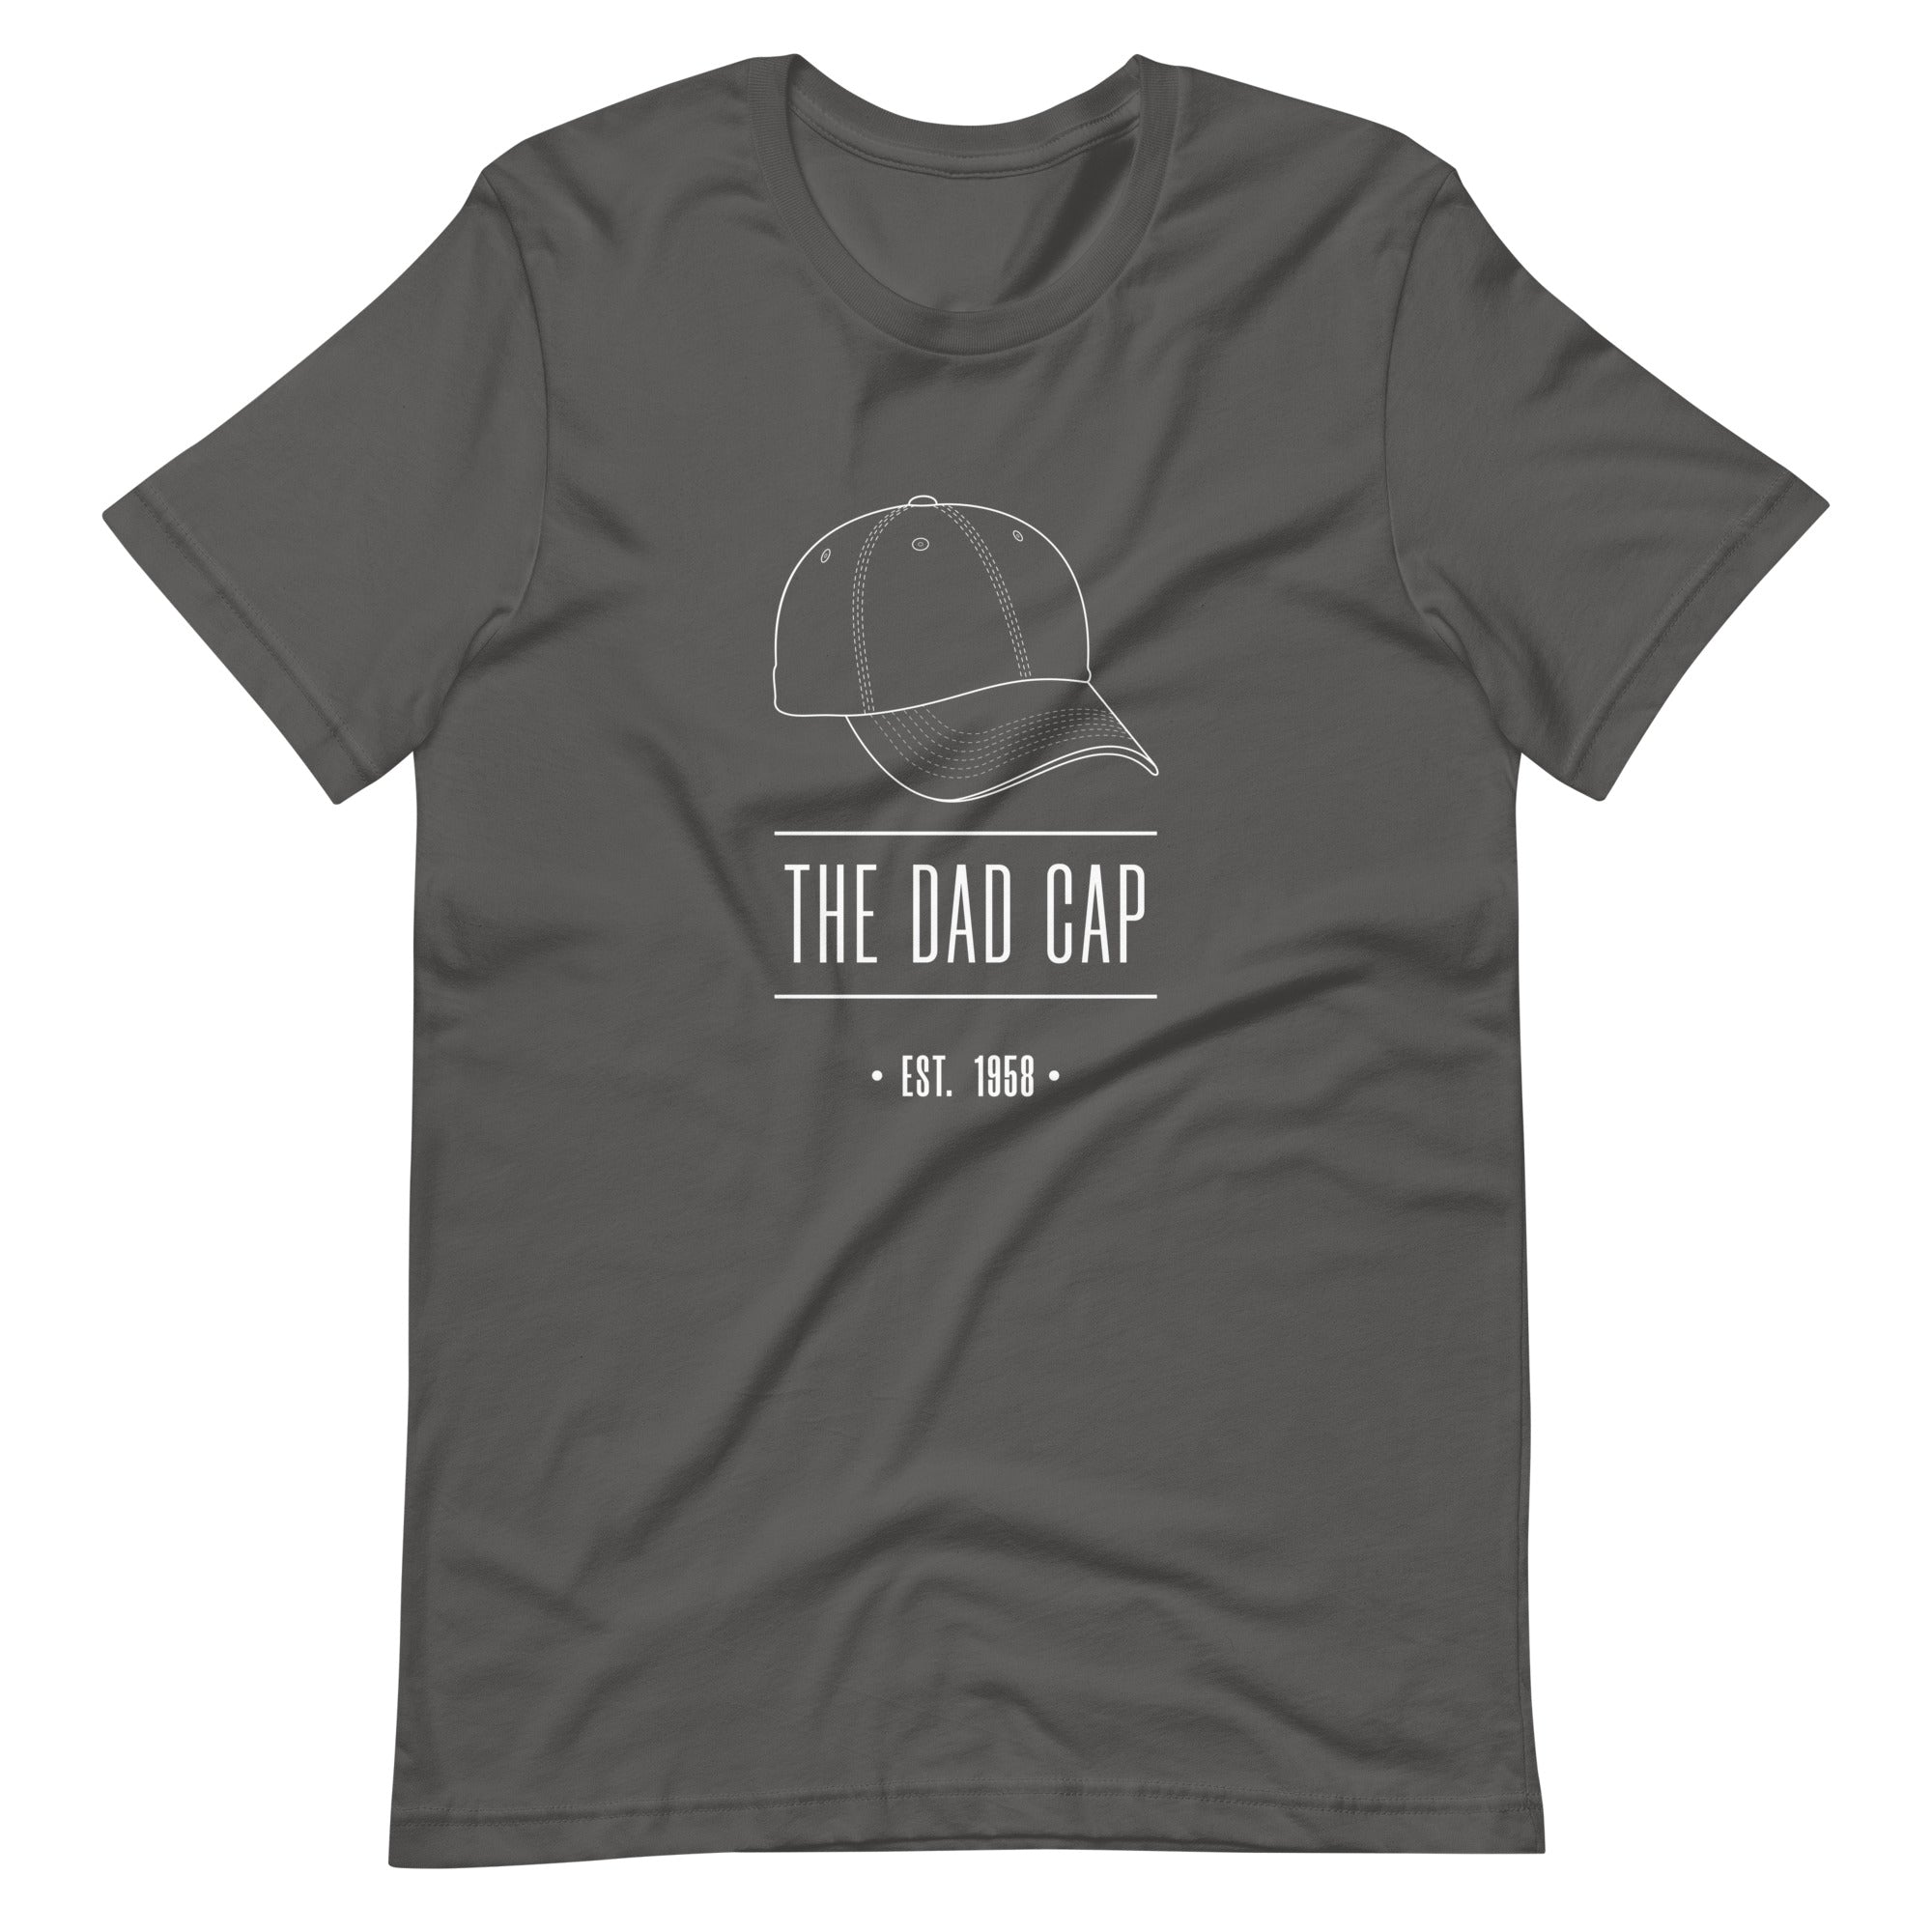 The Dad Cap Tee